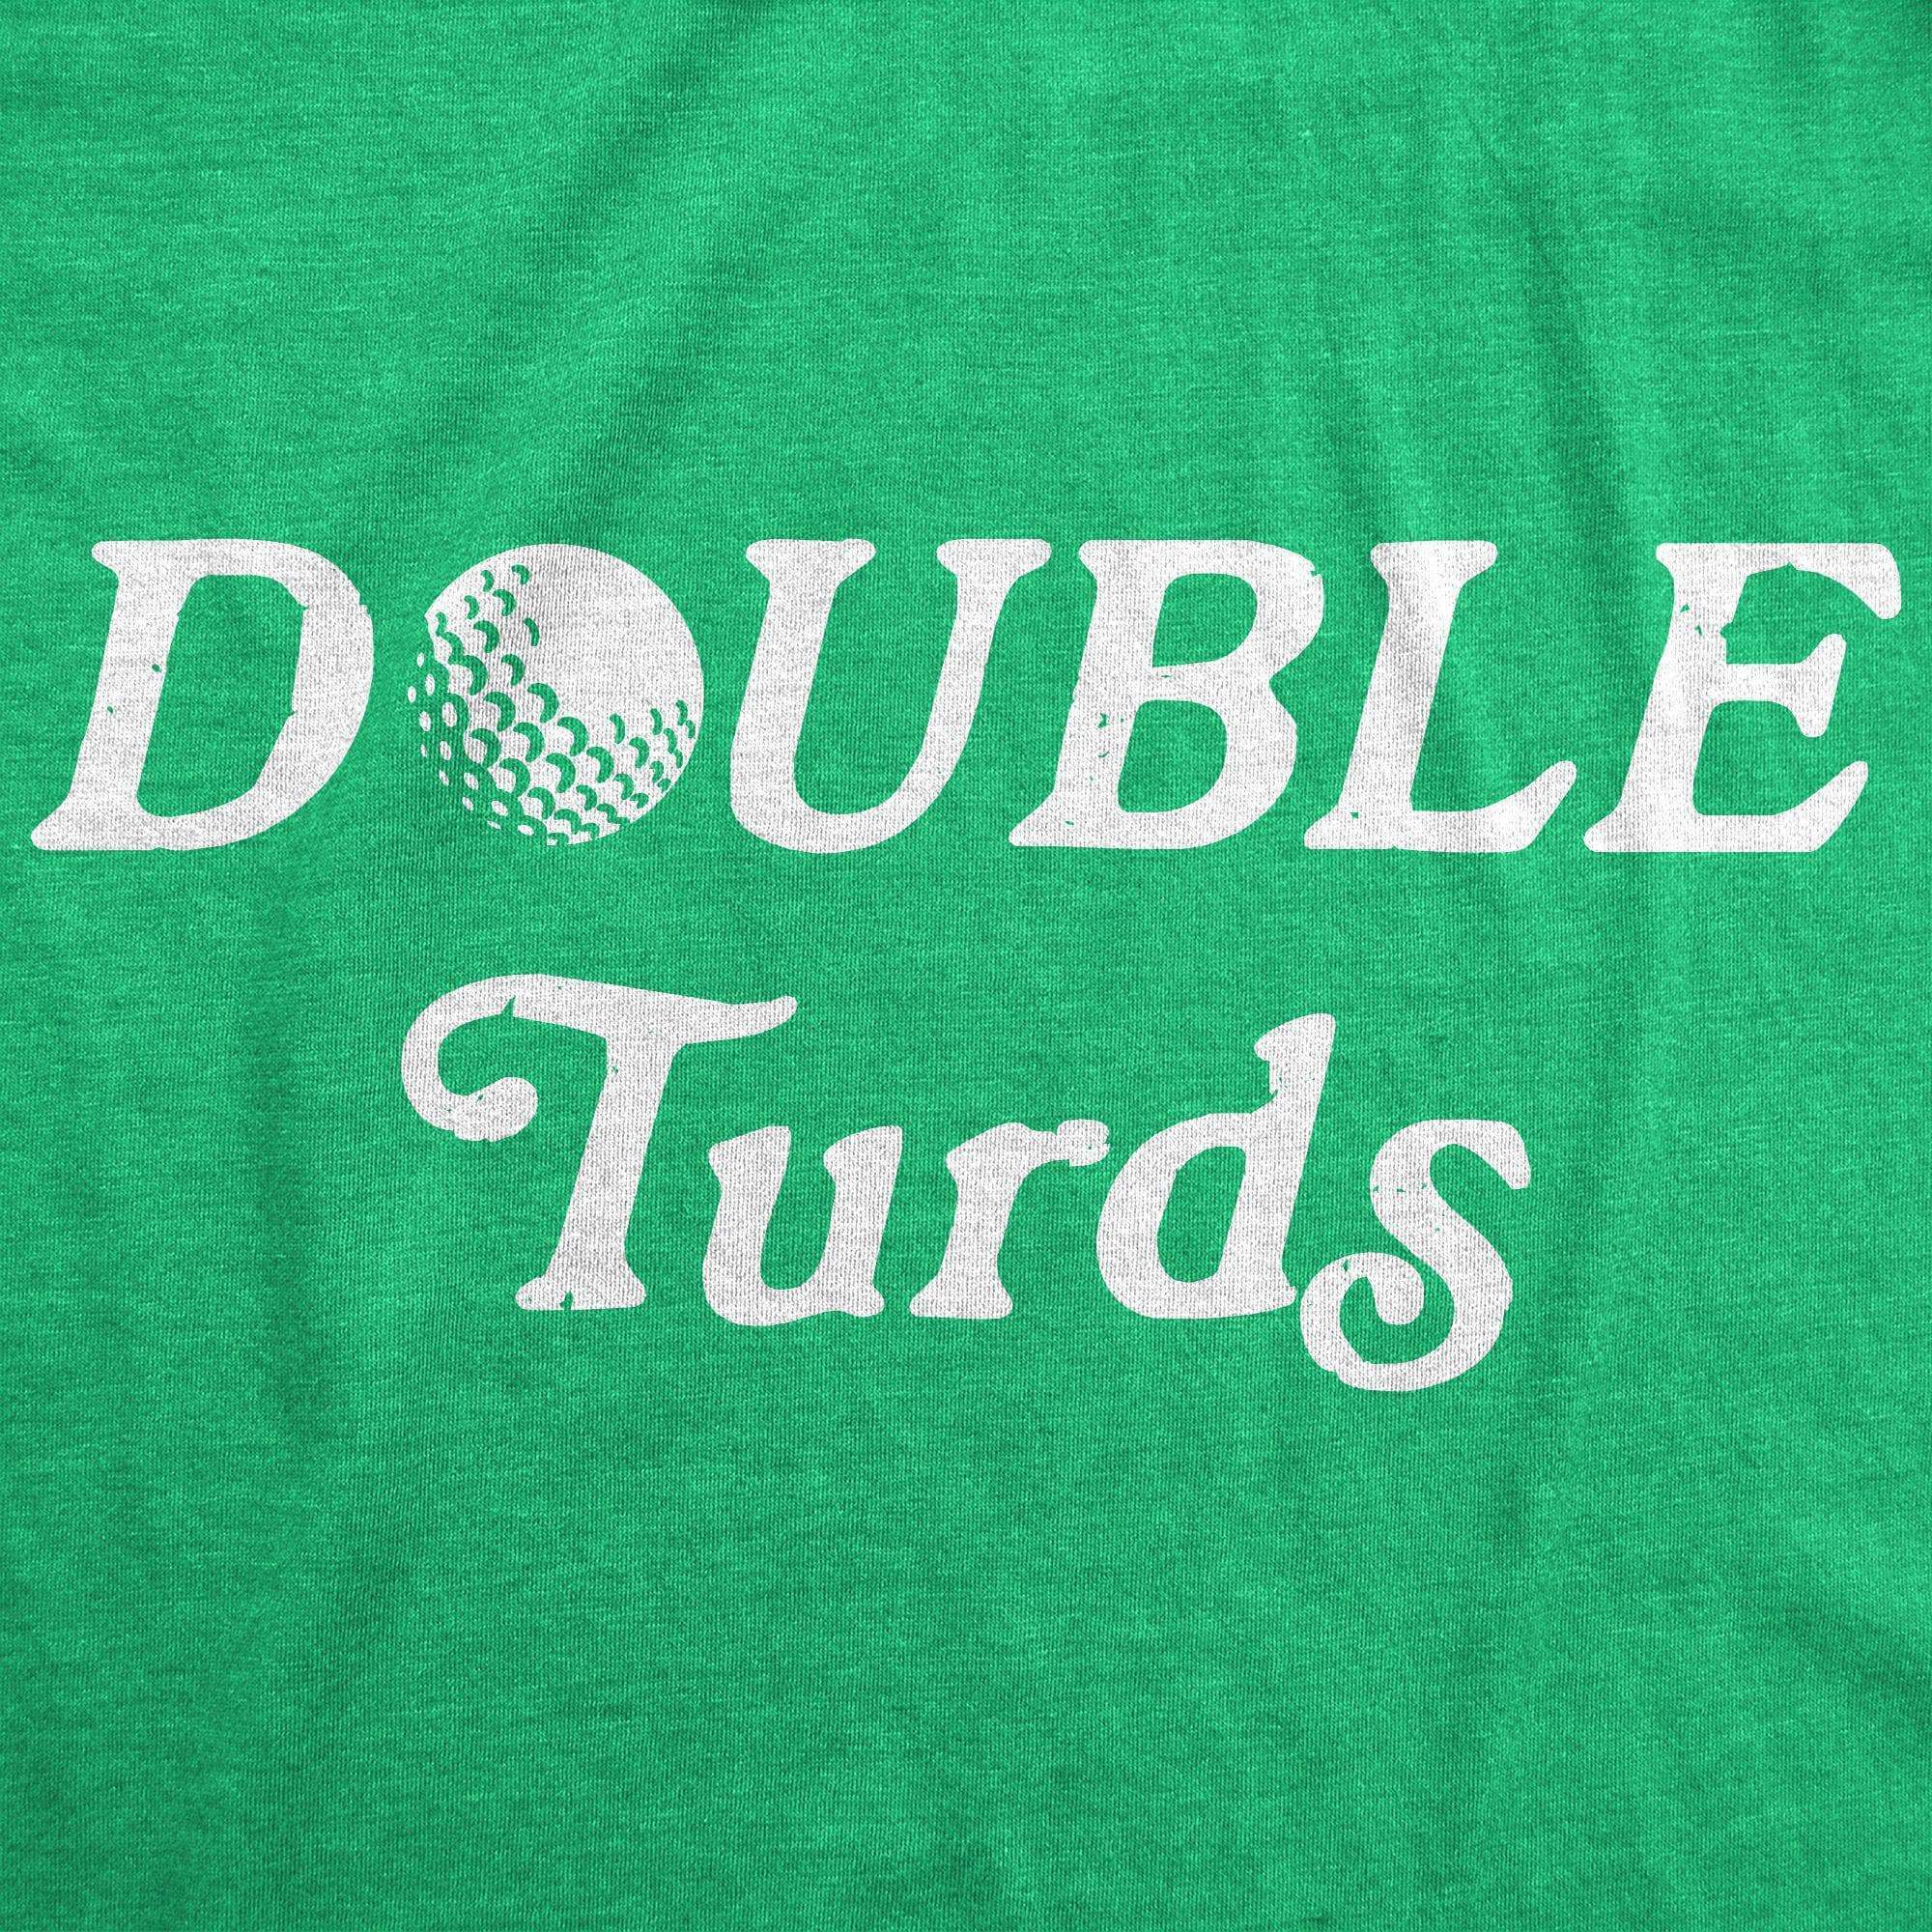 Double Turds Men's Tshirt - Crazy Dog T-Shirts